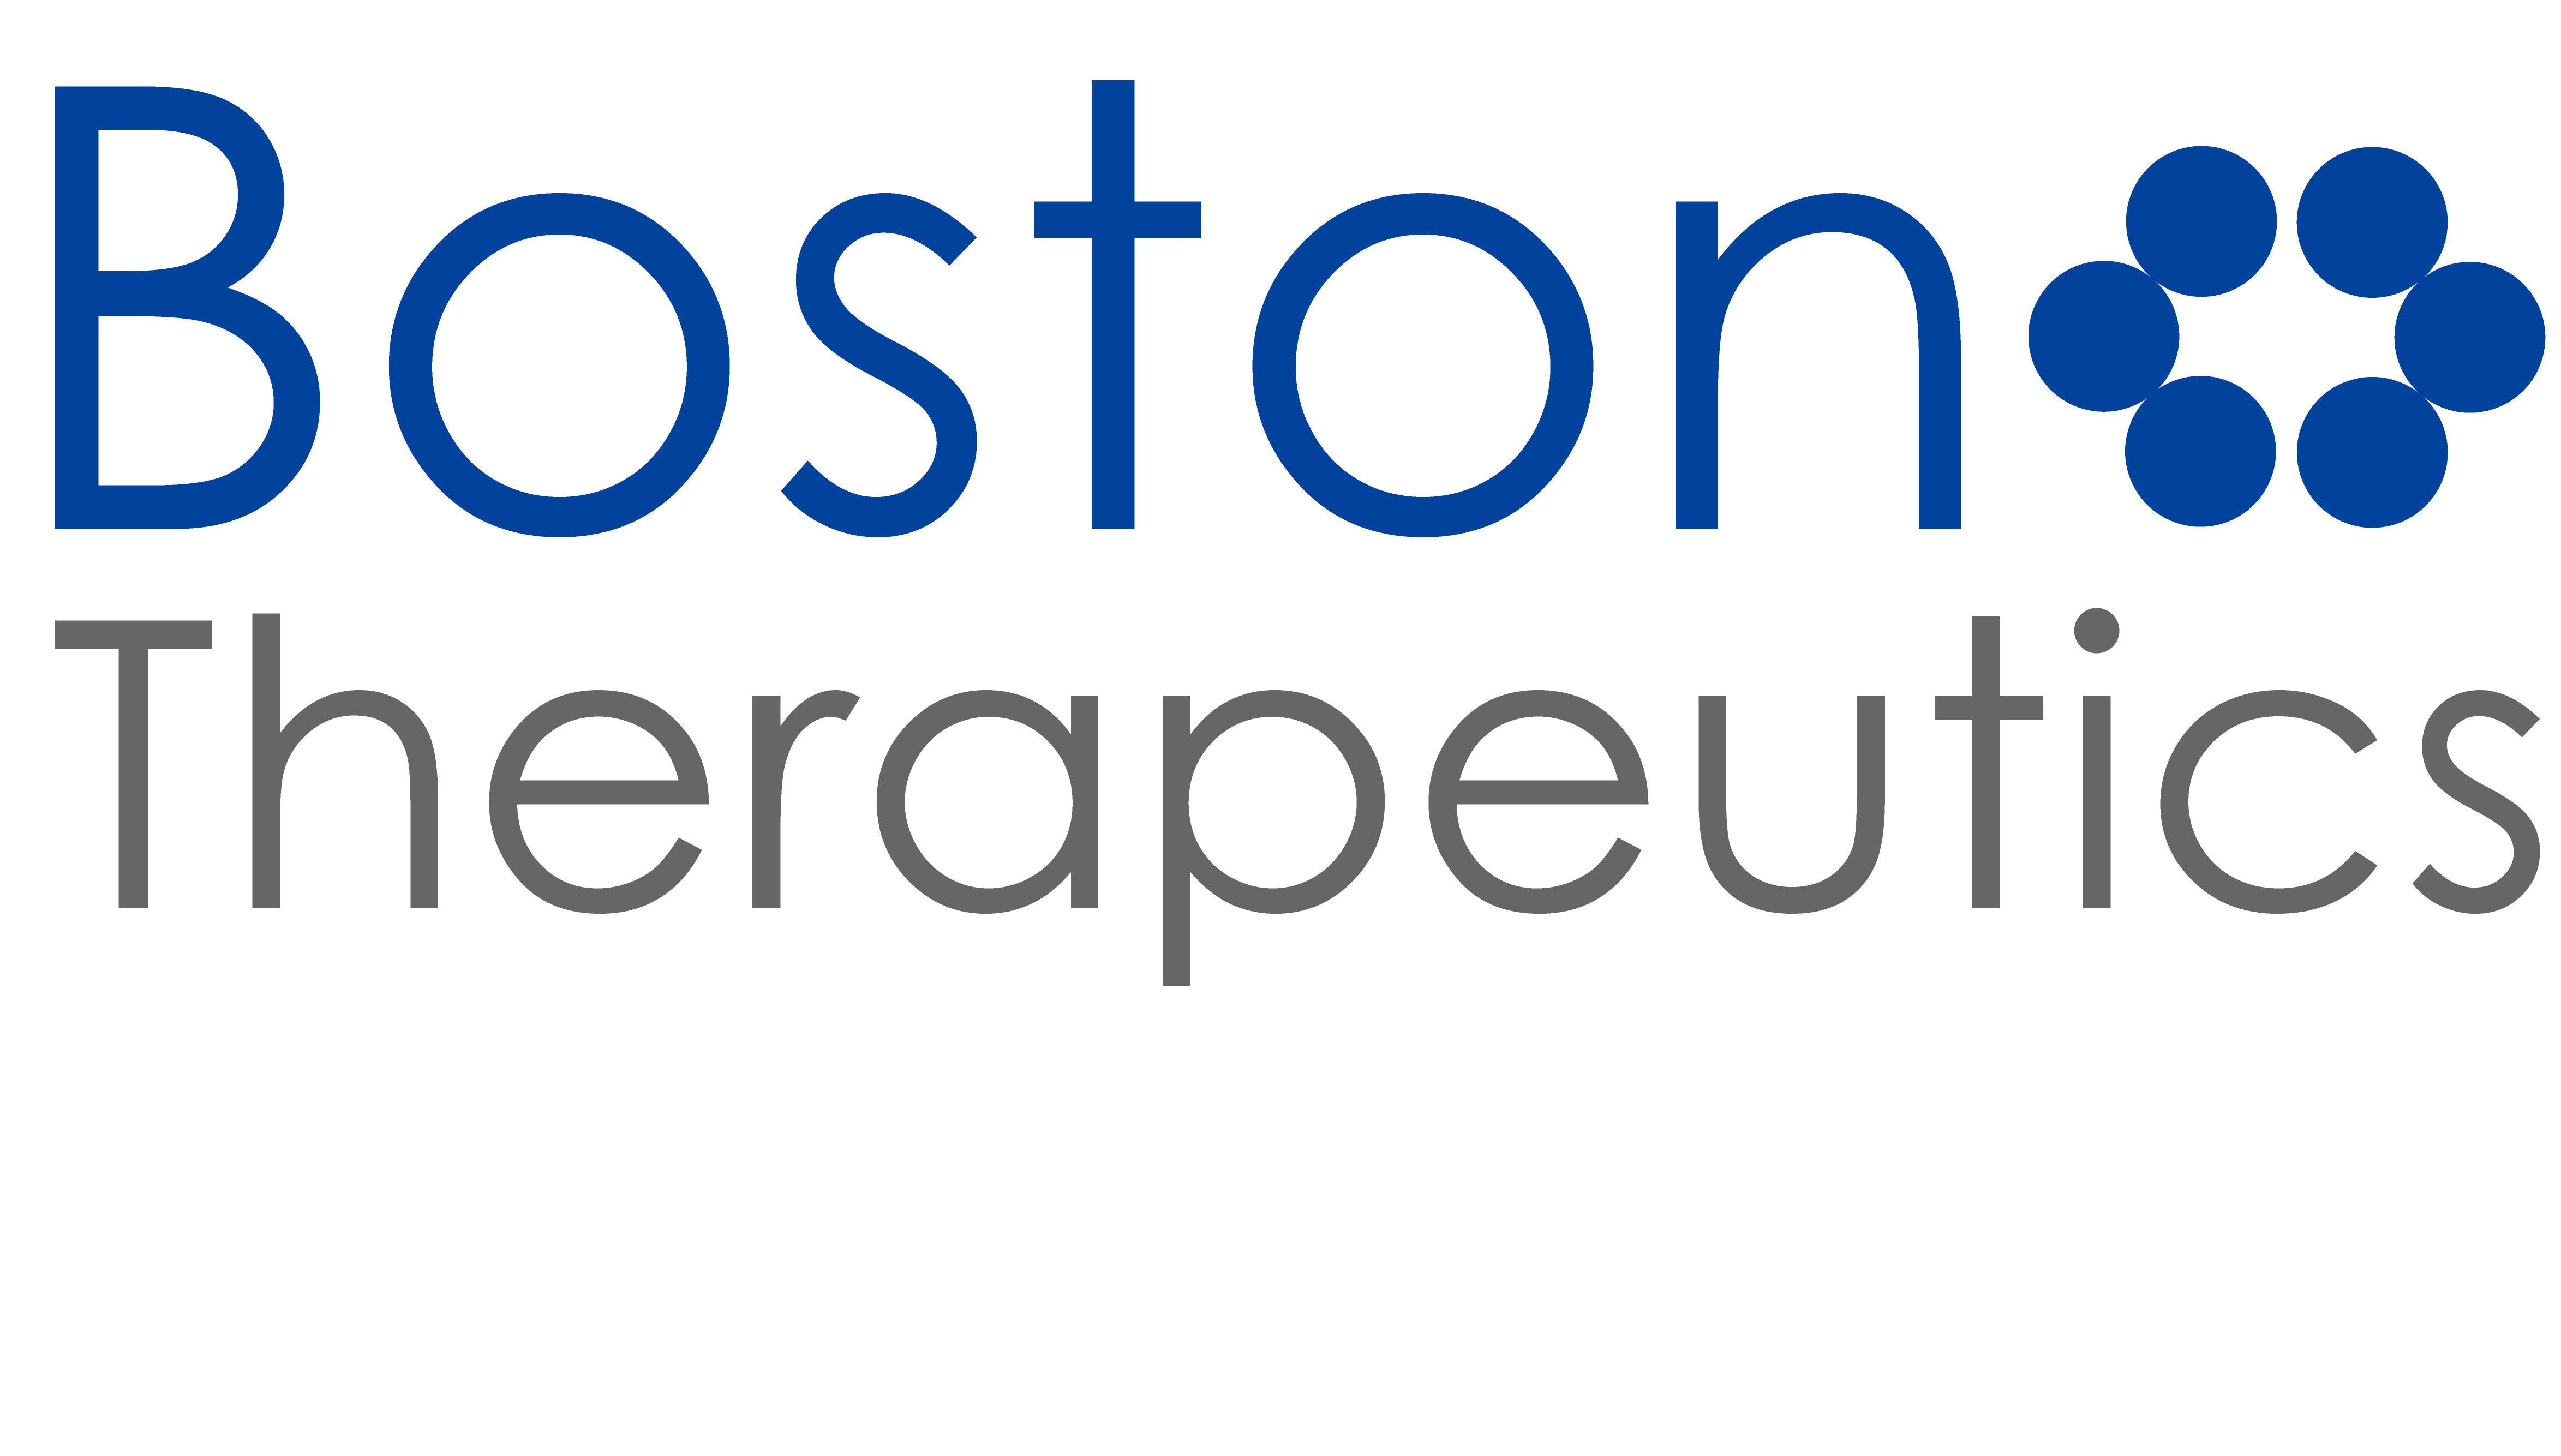 Boston Therapeutics, Inc. Logo